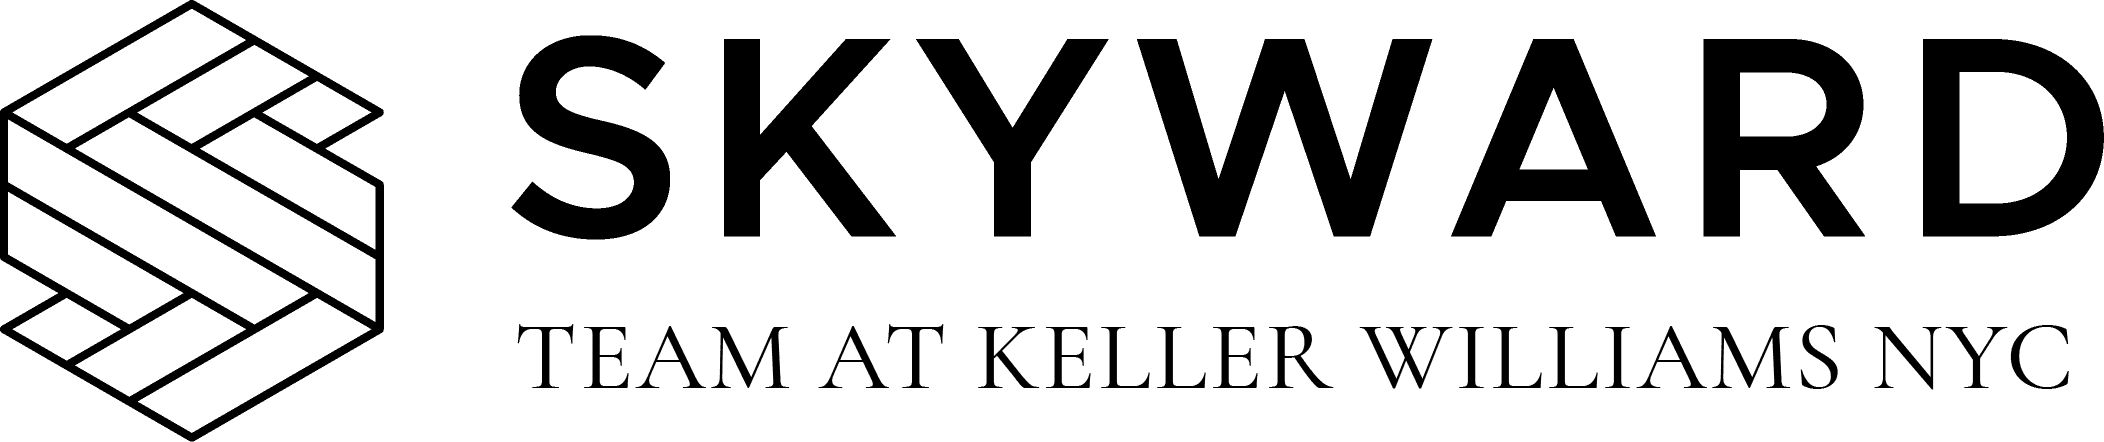 Skyward Team at Keller Williams NYC